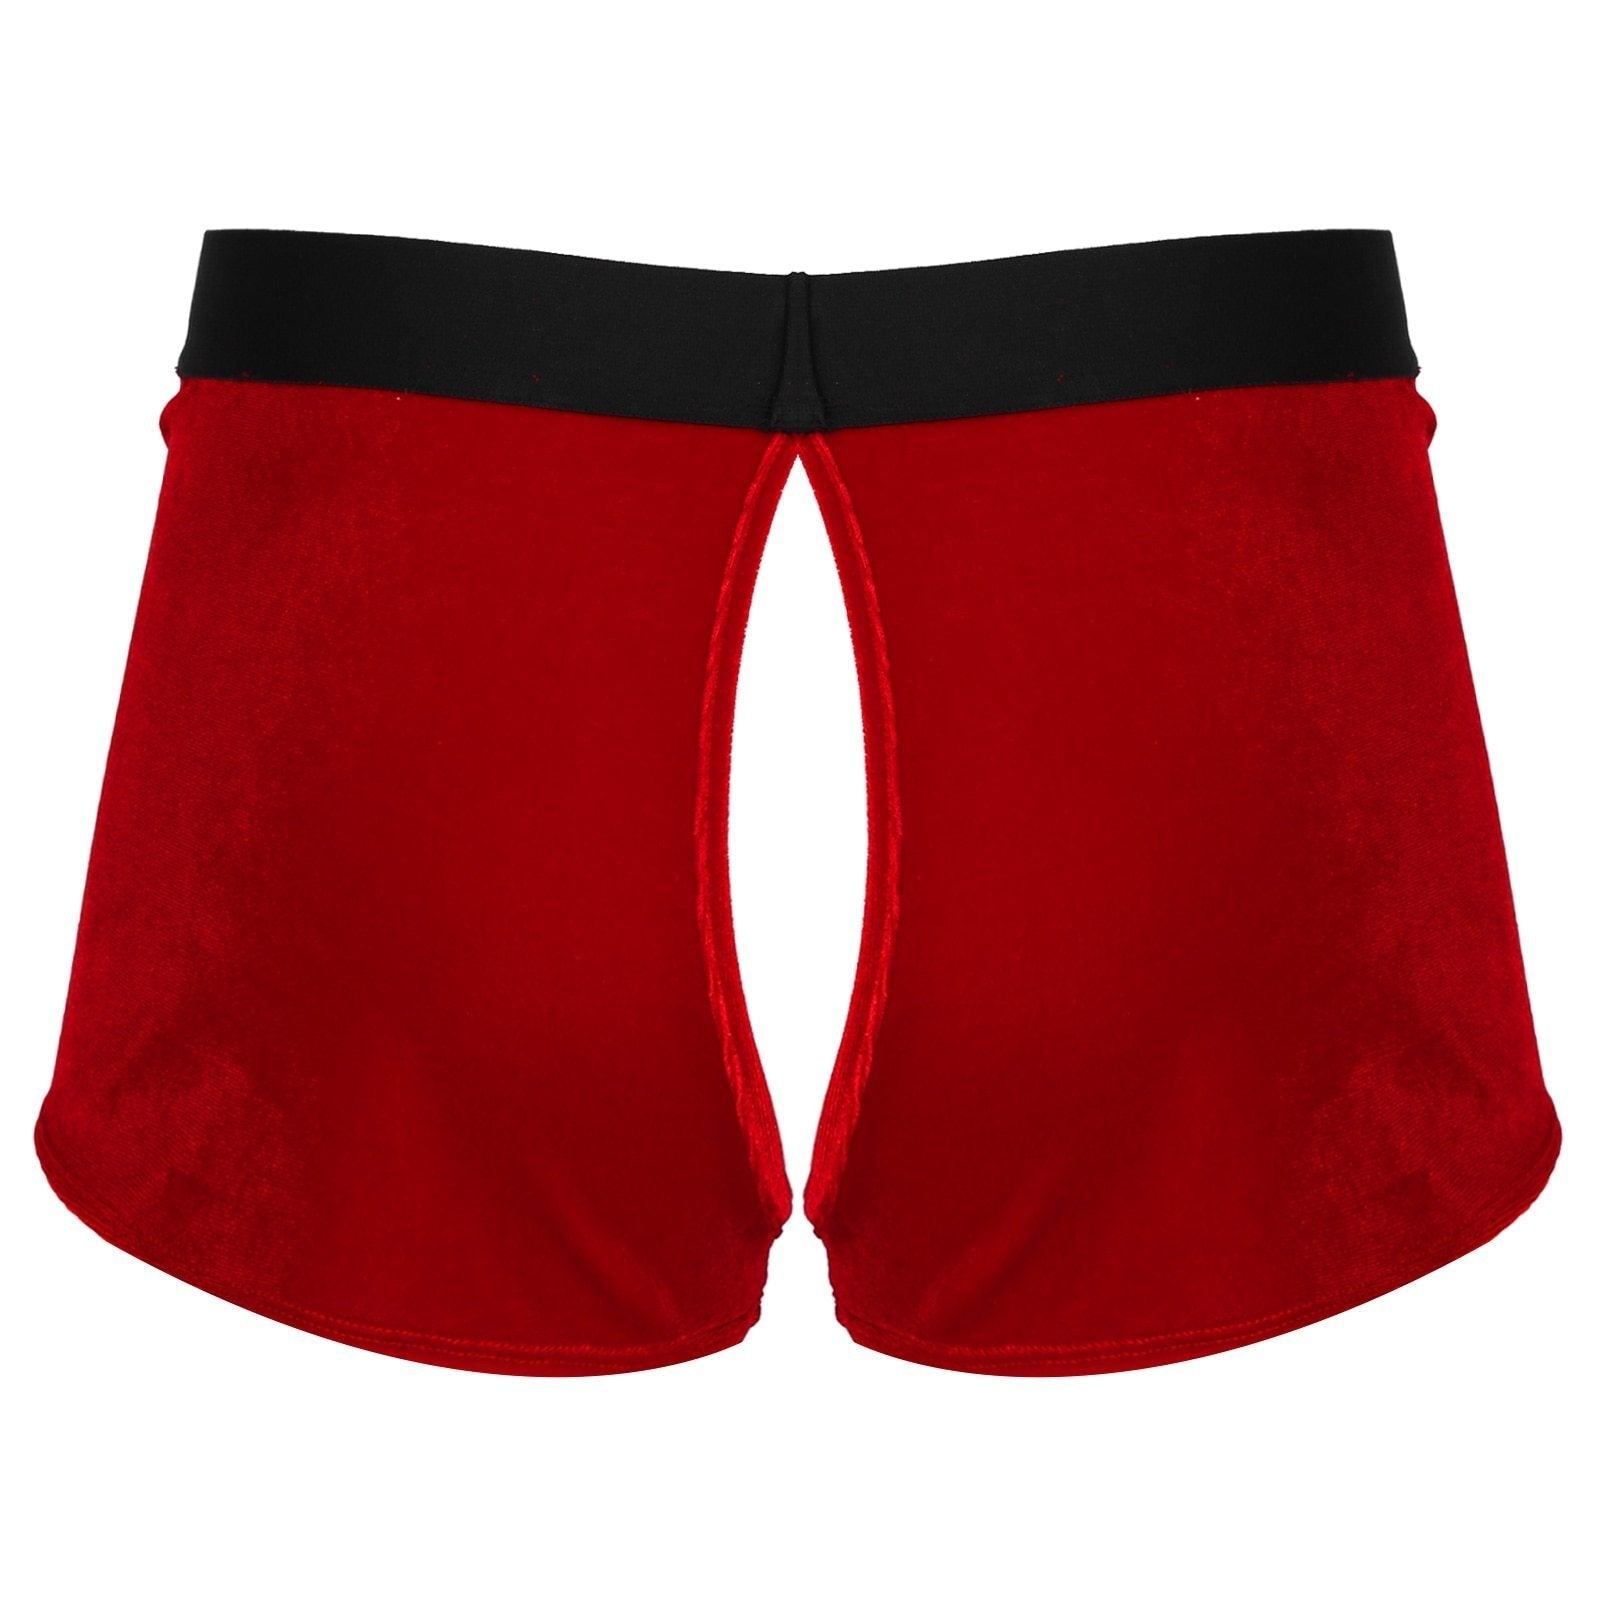 SALE - XMAS GIFT - Mens Christmas Naughty Santa Boxer Shorts with Open Crotch